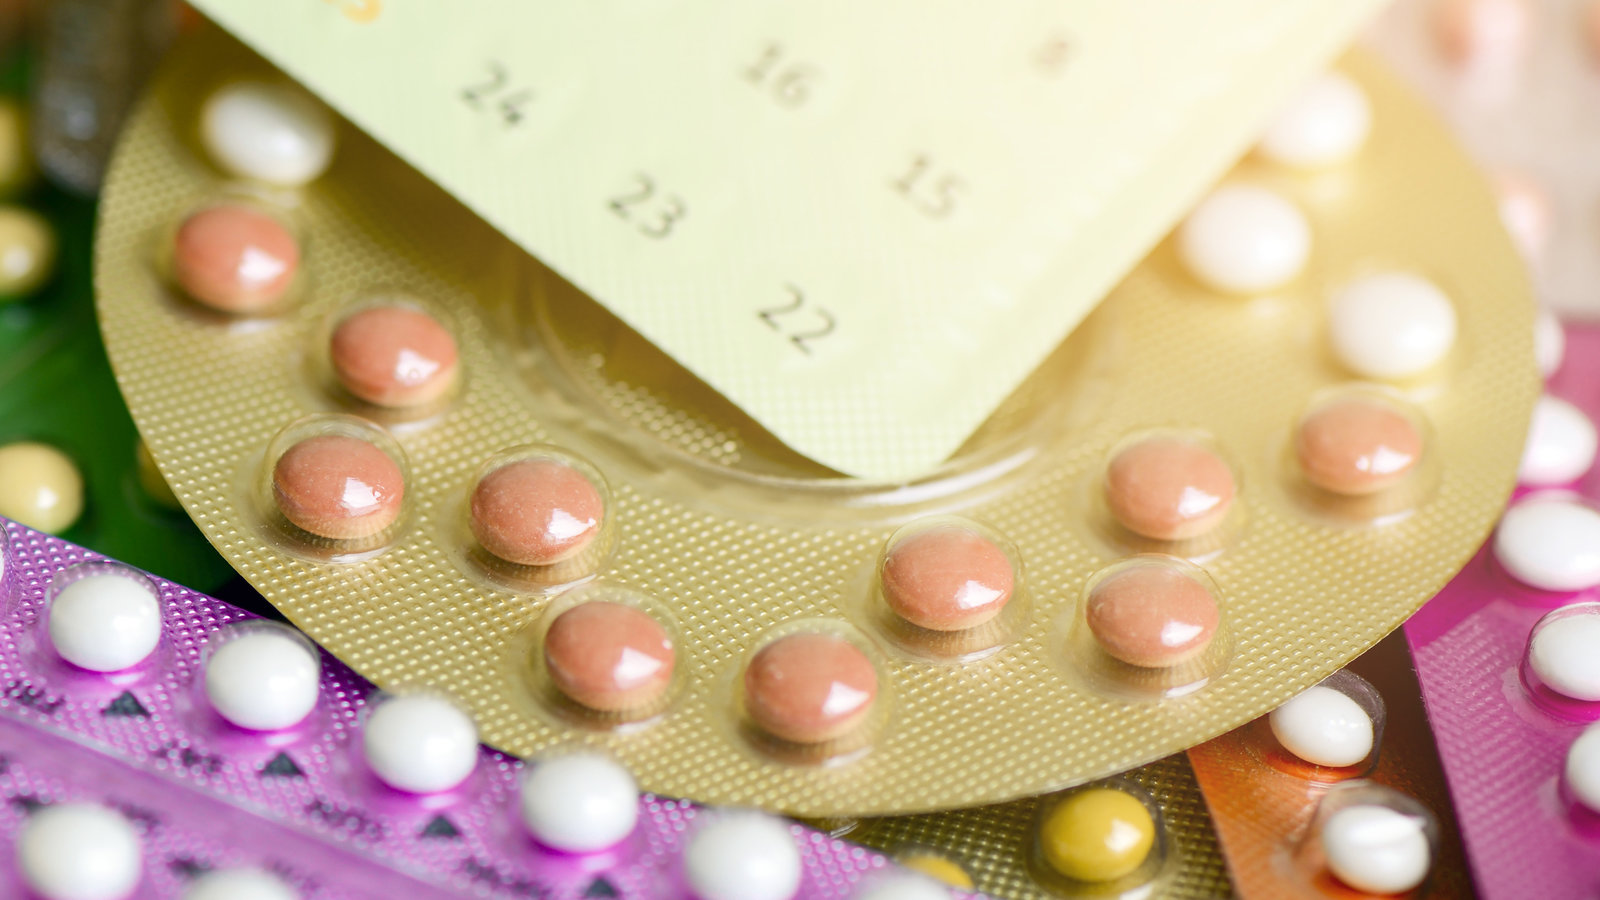 DDR-pilule-contraceptive